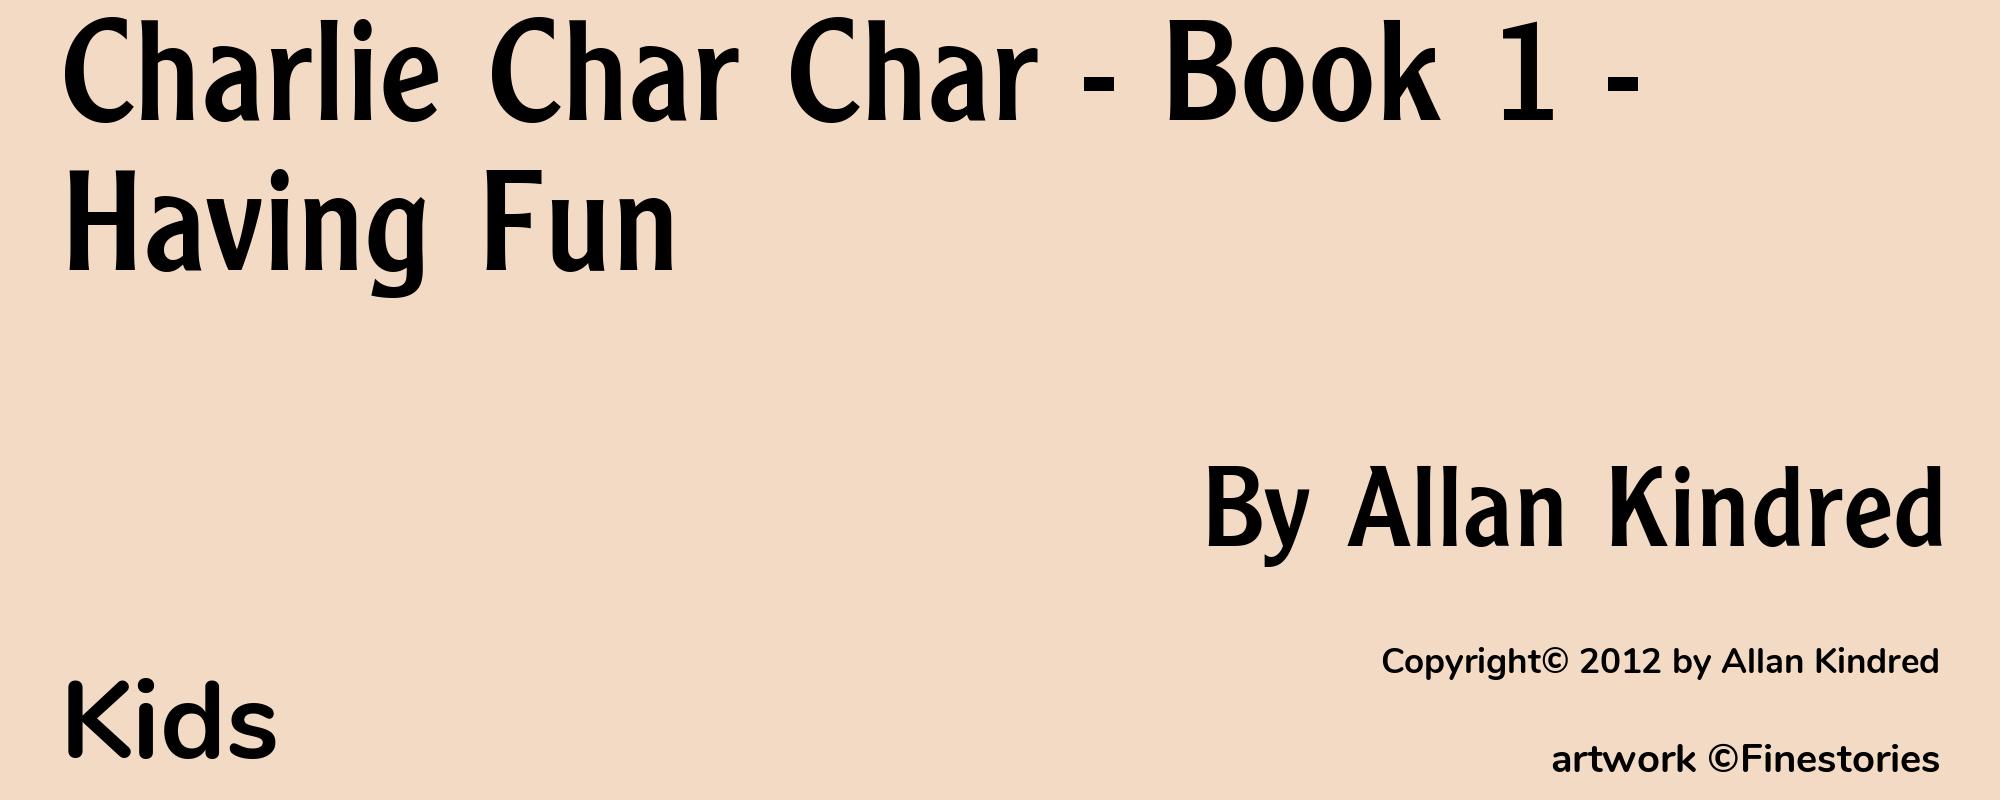 Charlie Char Char - Book 1 - Having Fun - Cover